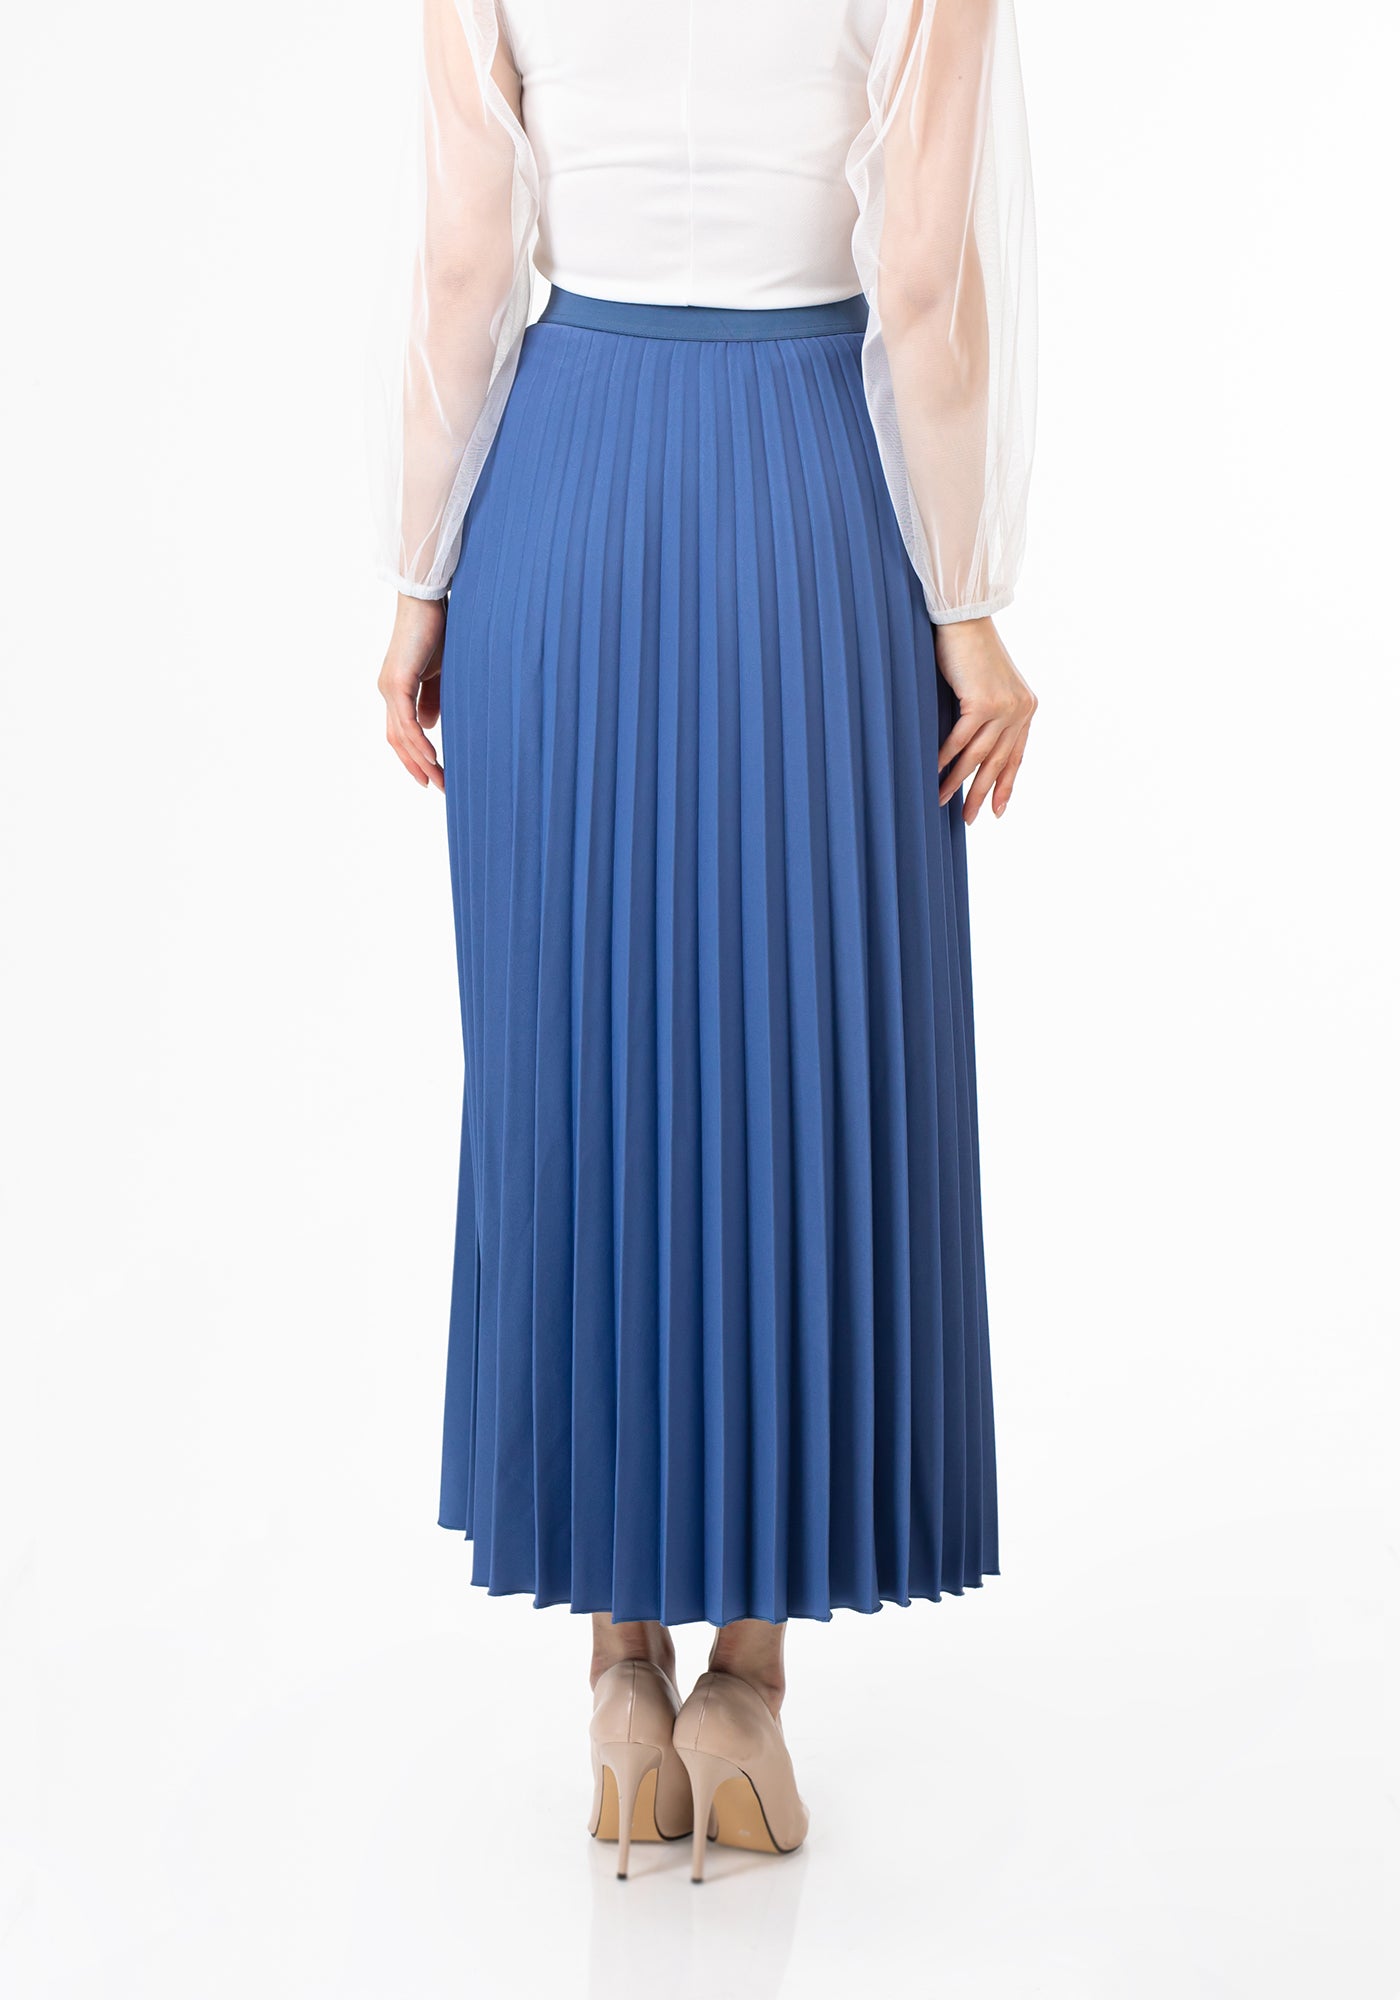 Indigo Pleated Maxi Skirt Elastic Waist Band Ankle Length Plisse Skirt - G-Line G-Line